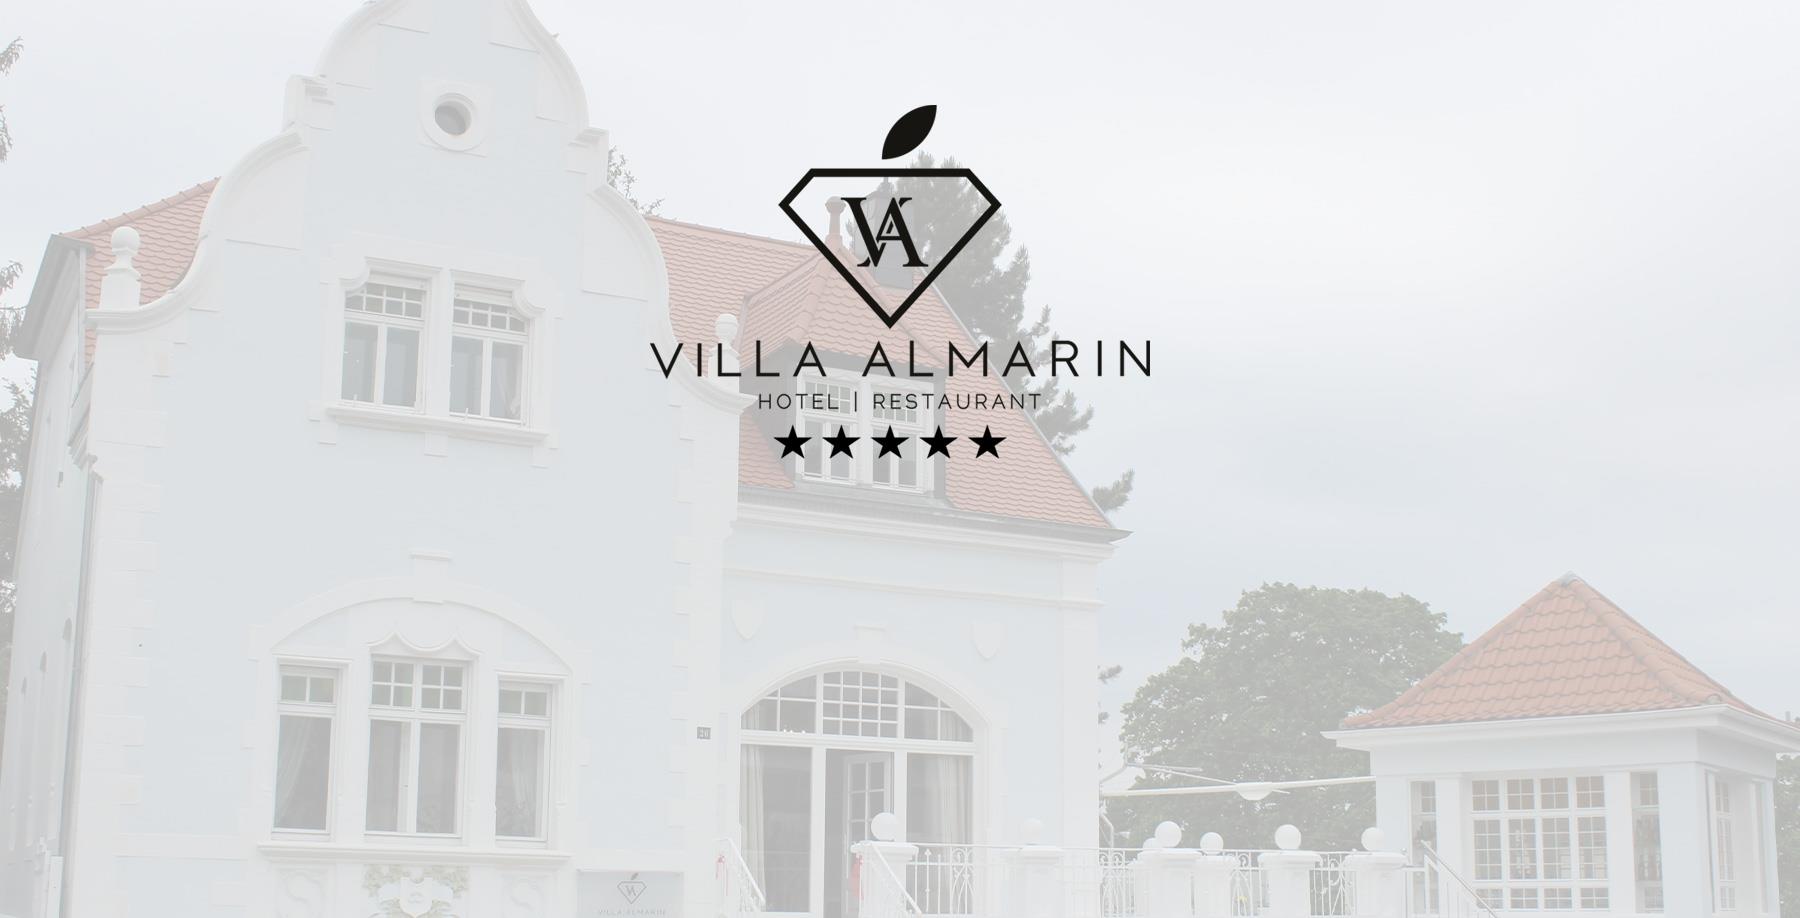 Villa Almarin Hotel - Germany